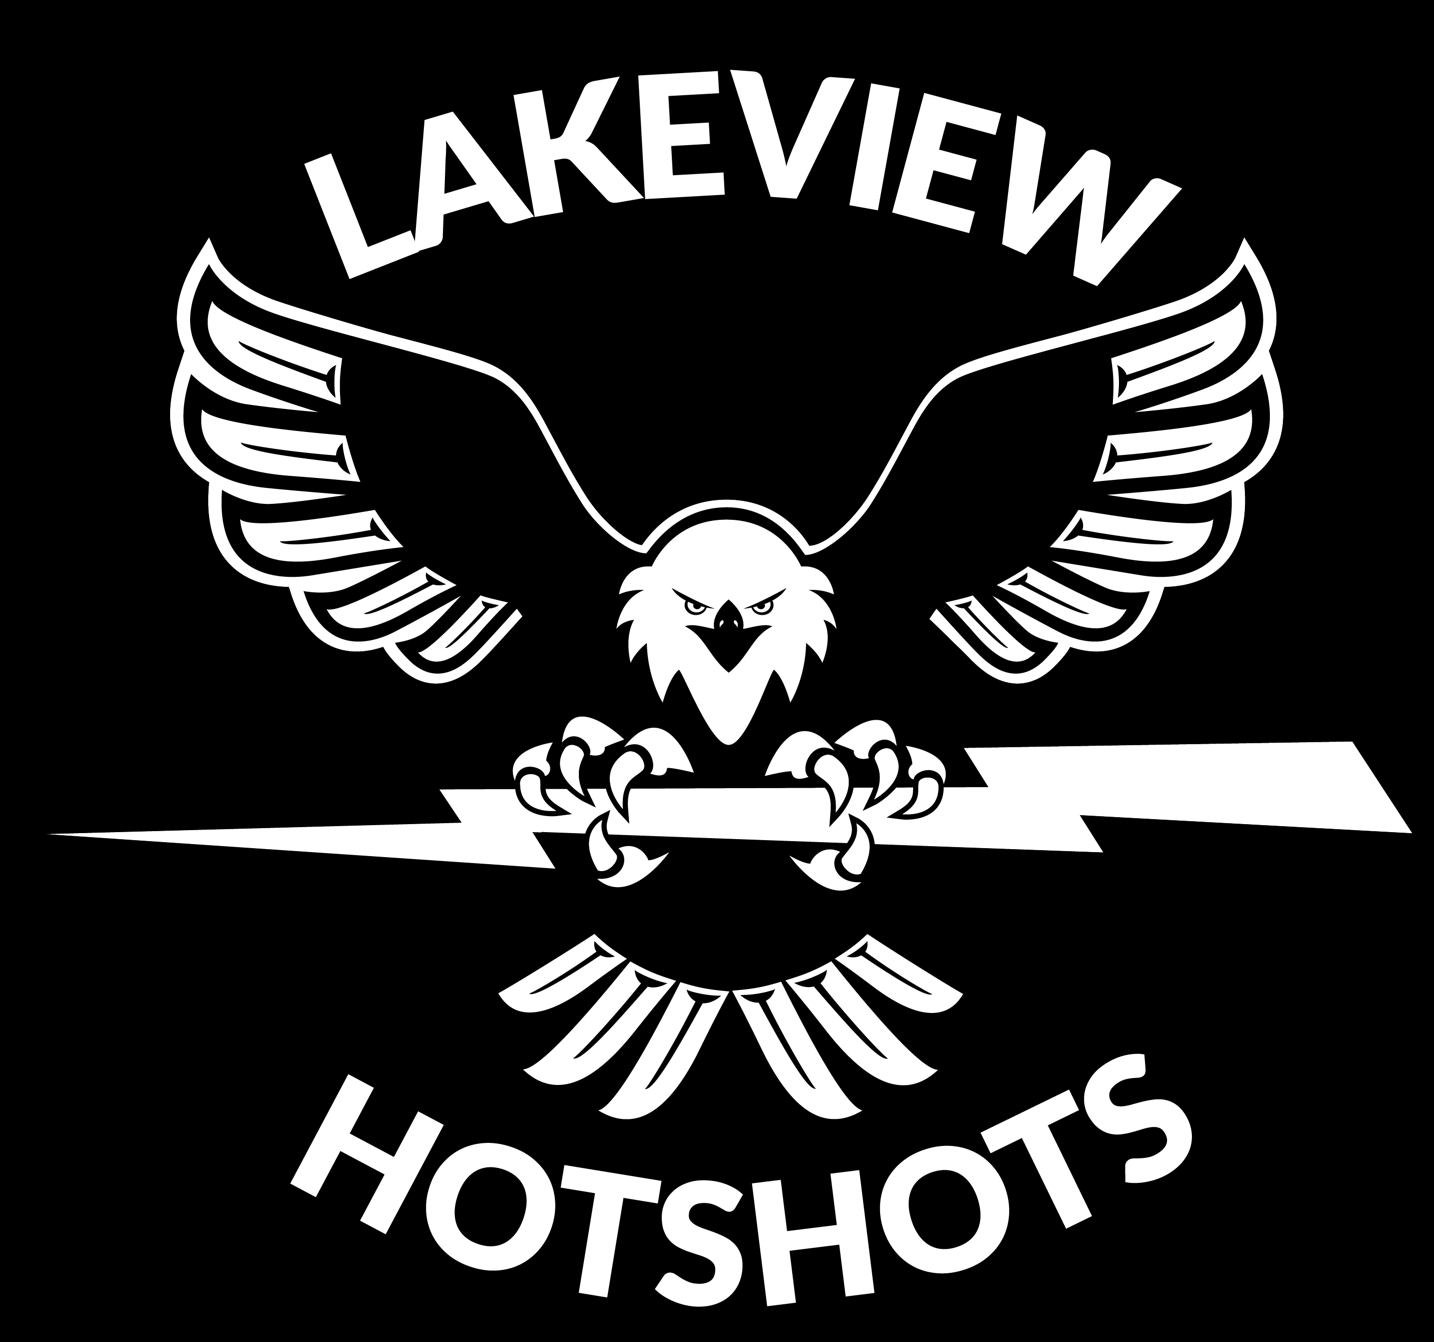 Lakeview Hotshots